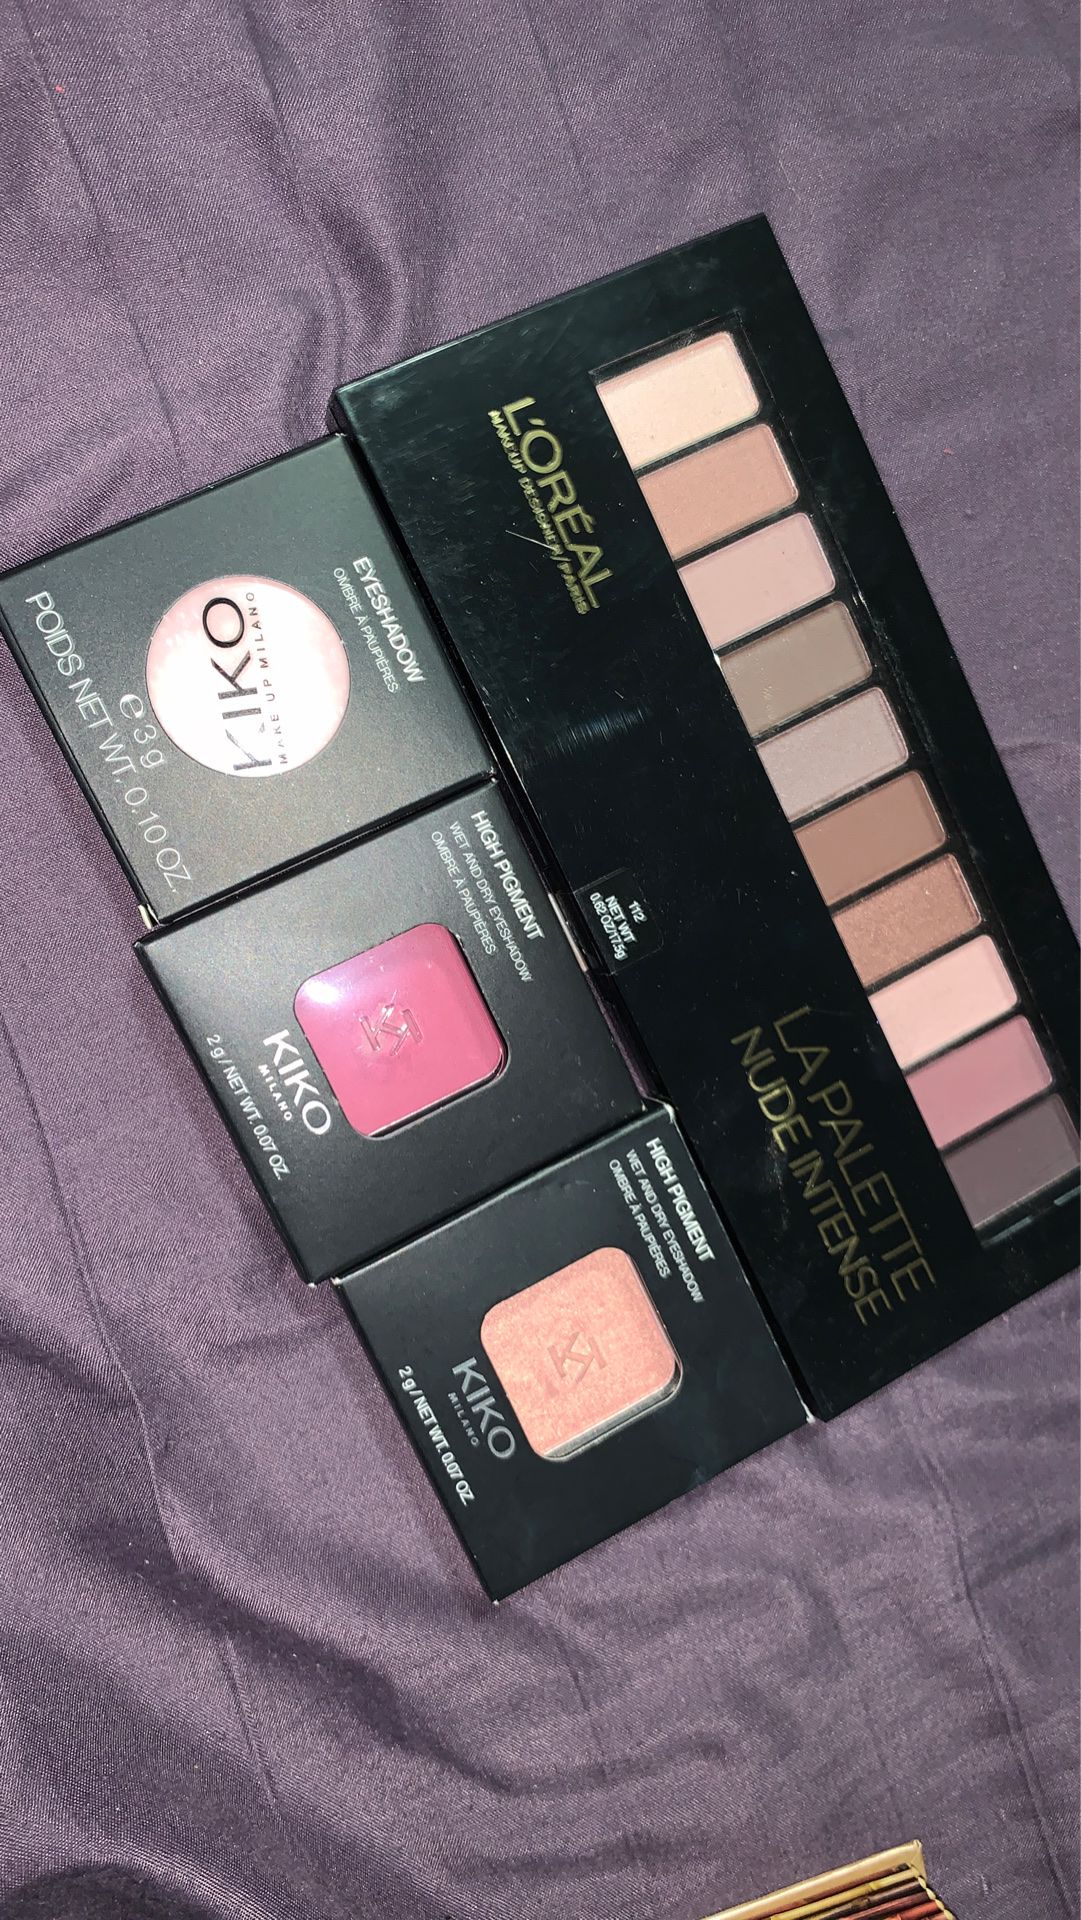 Kiko Milani eyeshadows and L’Oréal Eyeshadow Palette